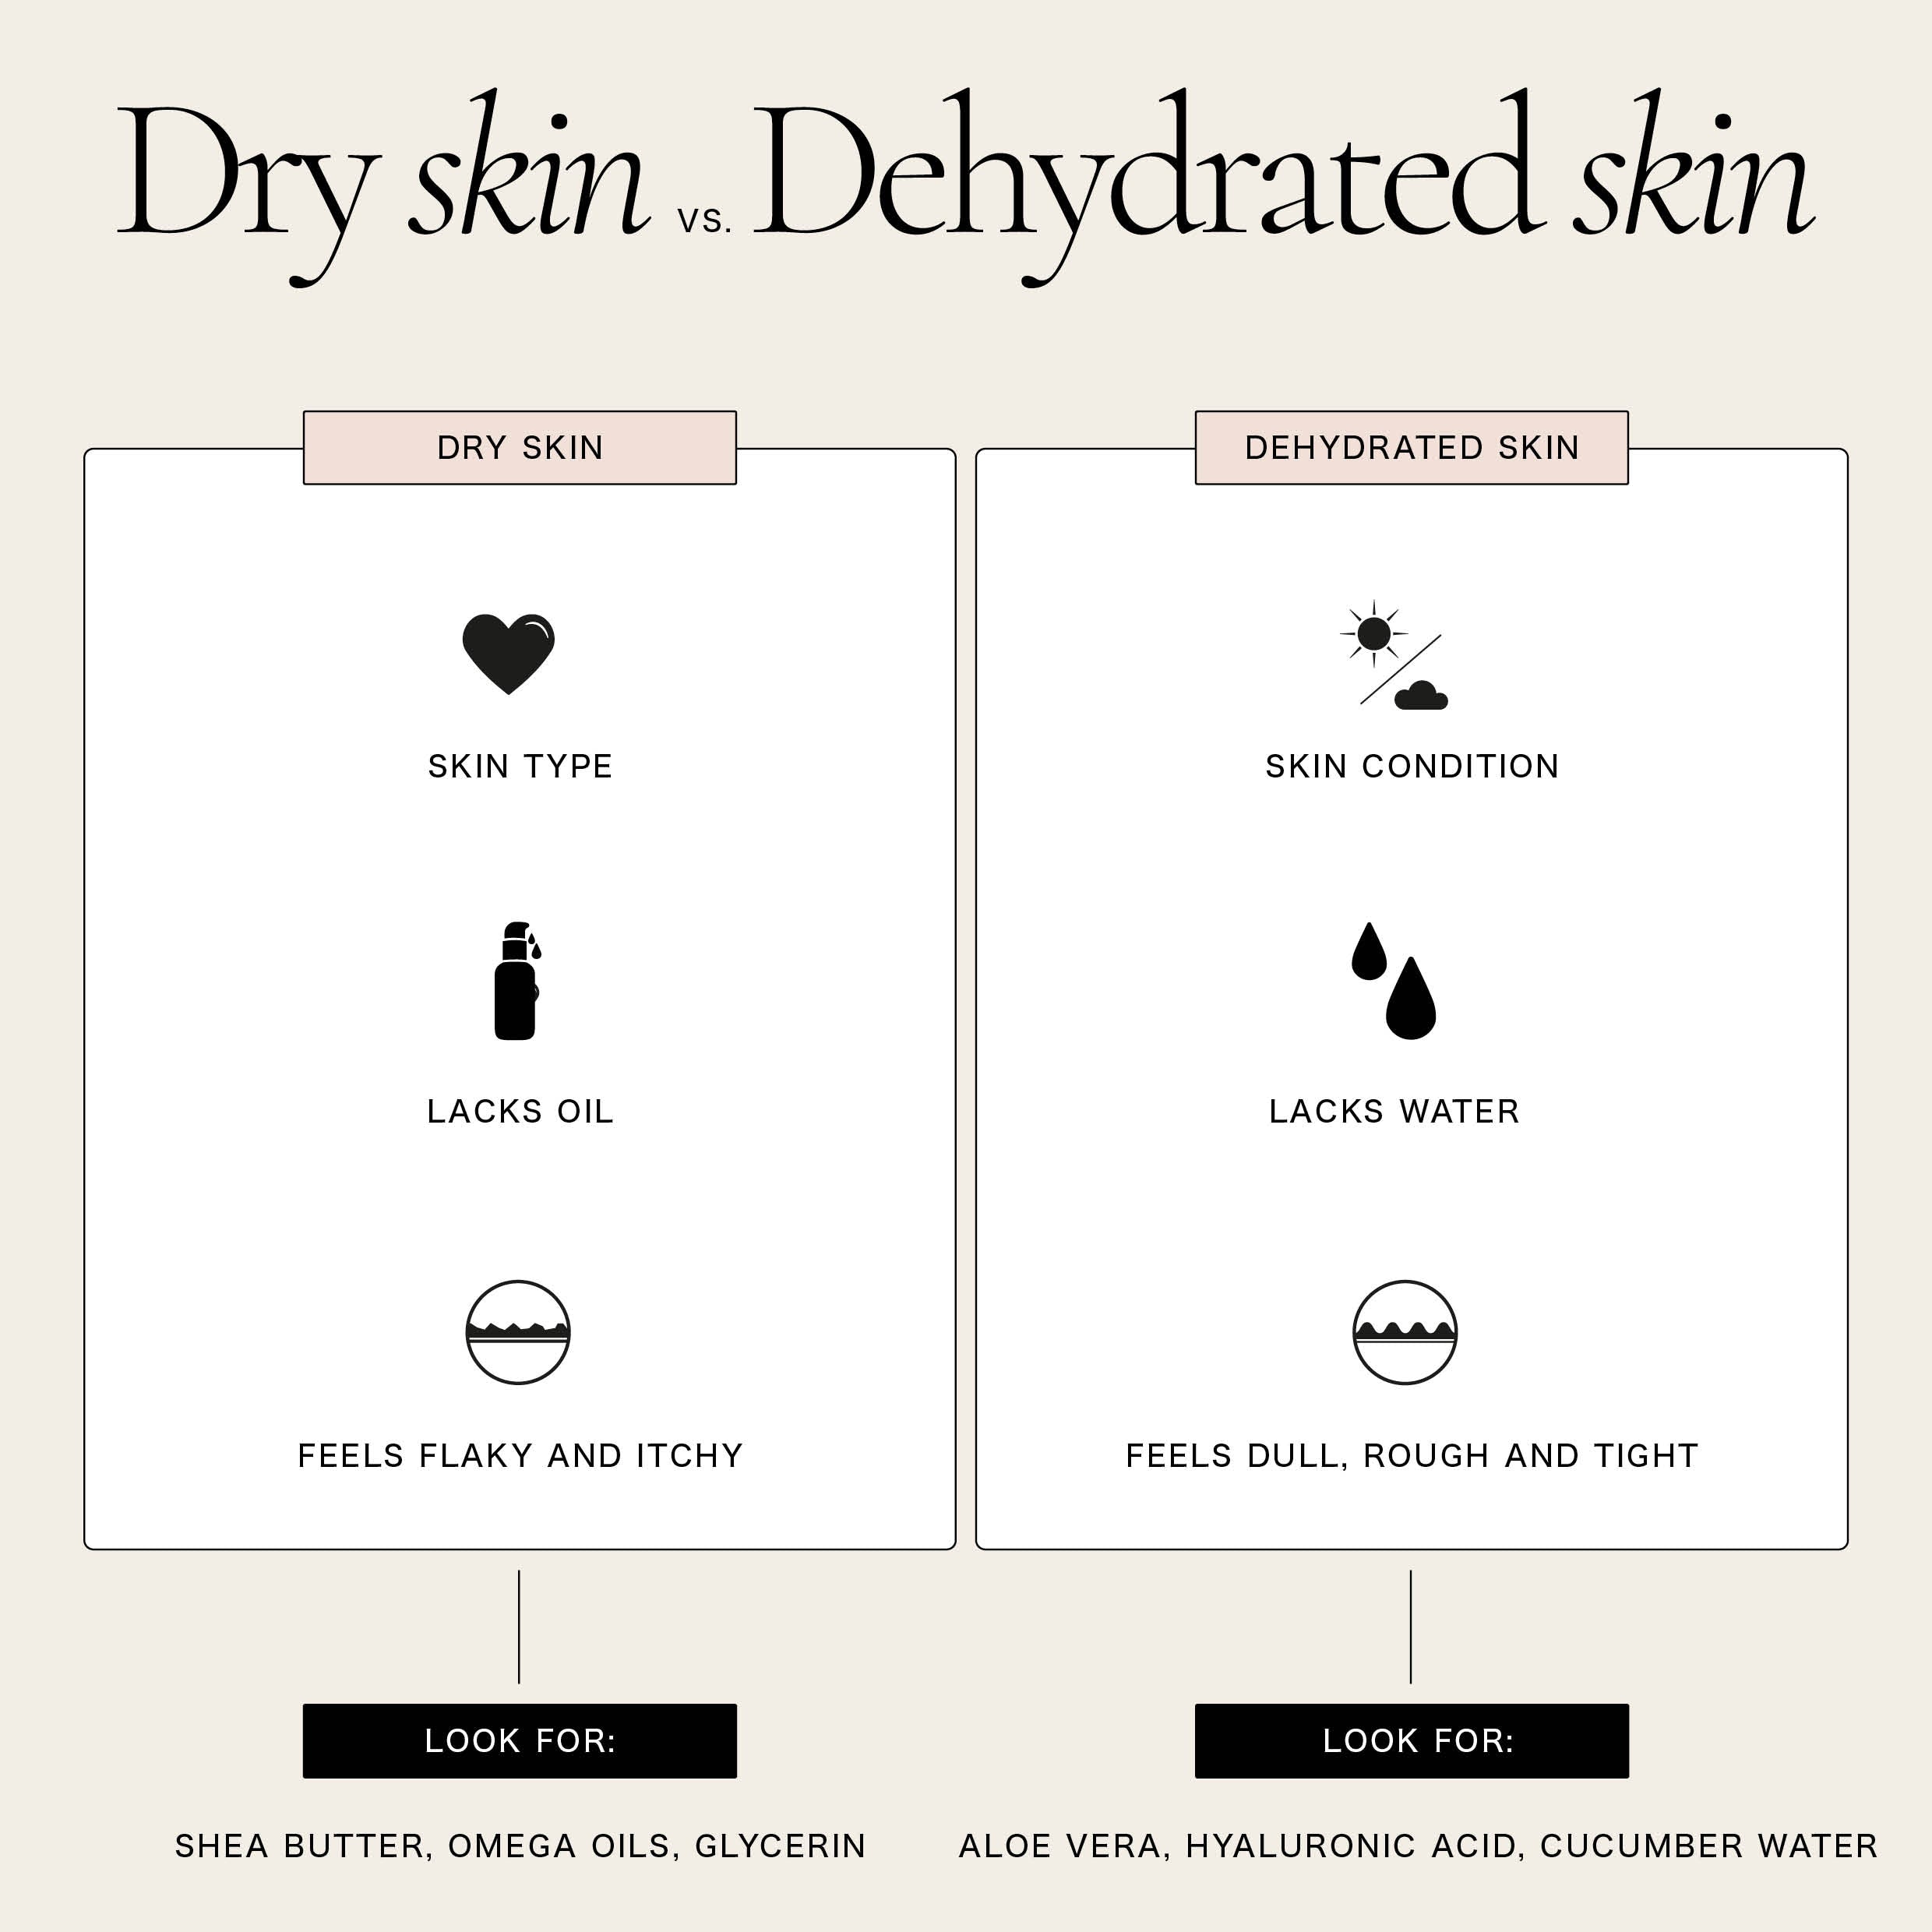 dry versus dehydrated skin